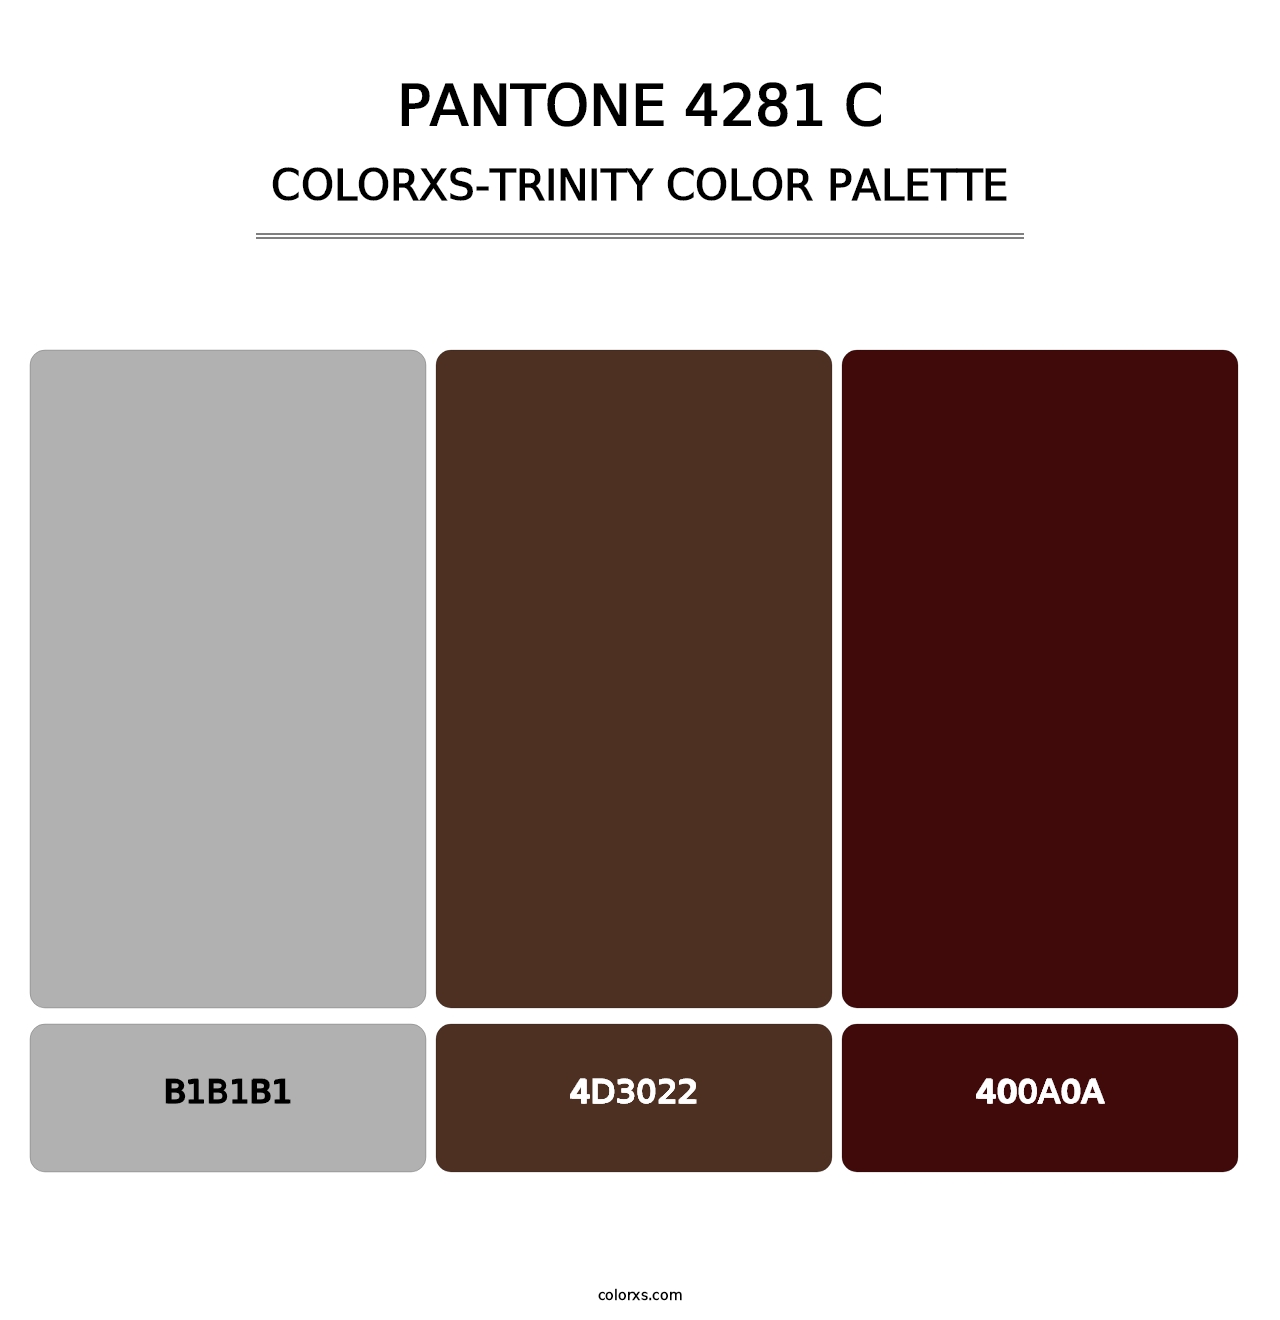 PANTONE 4281 C - Colorxs Trinity Palette